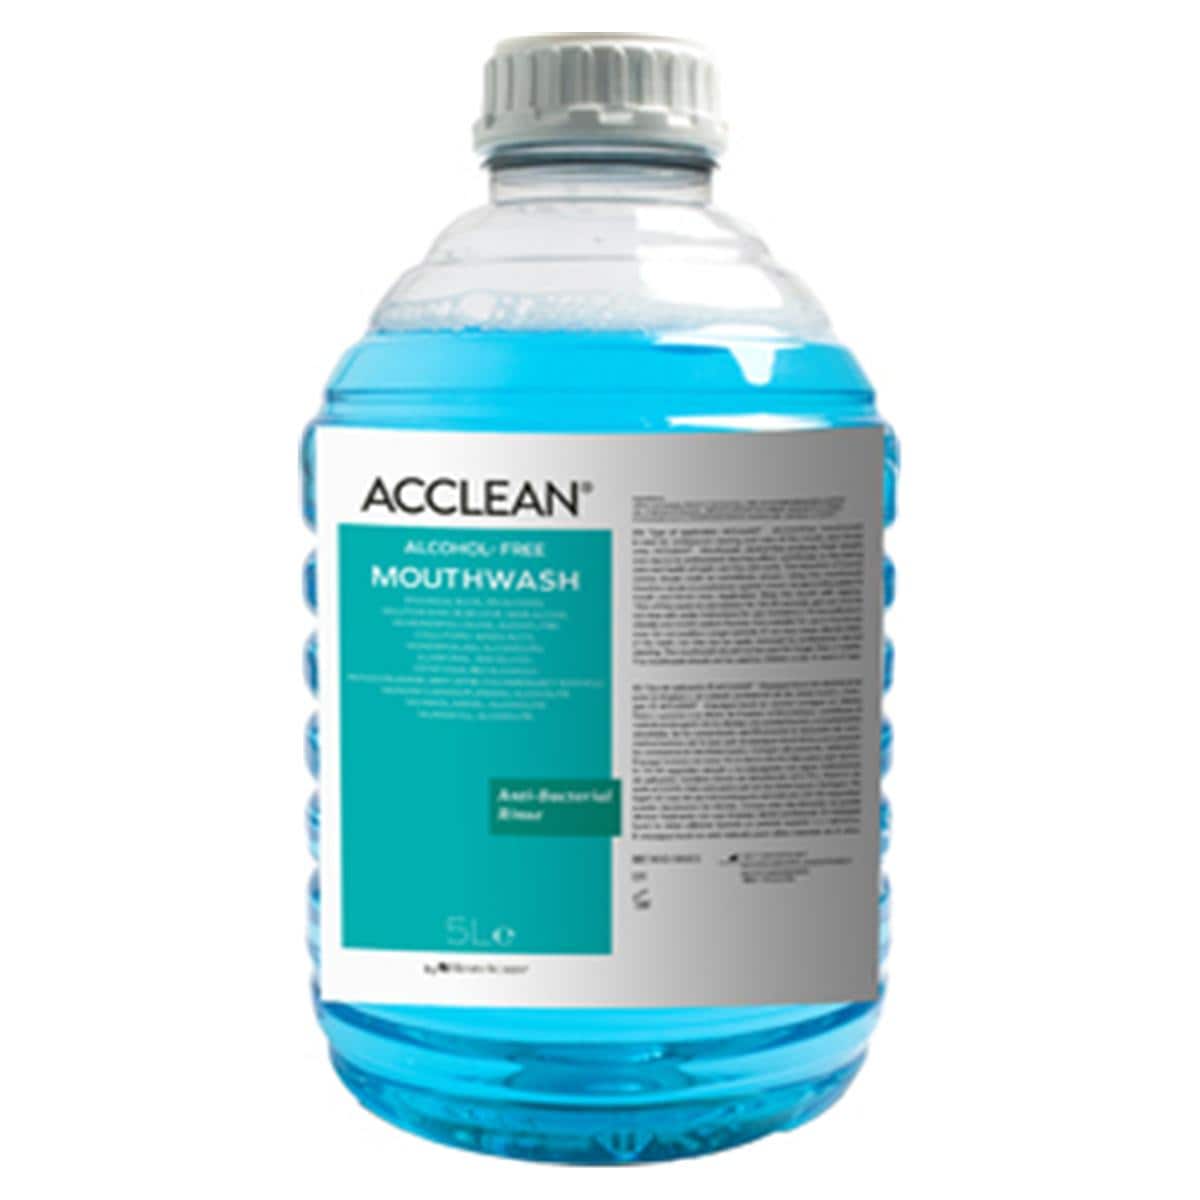 Acclean Mondspoeling alcoholvrij - Can, 5 liter